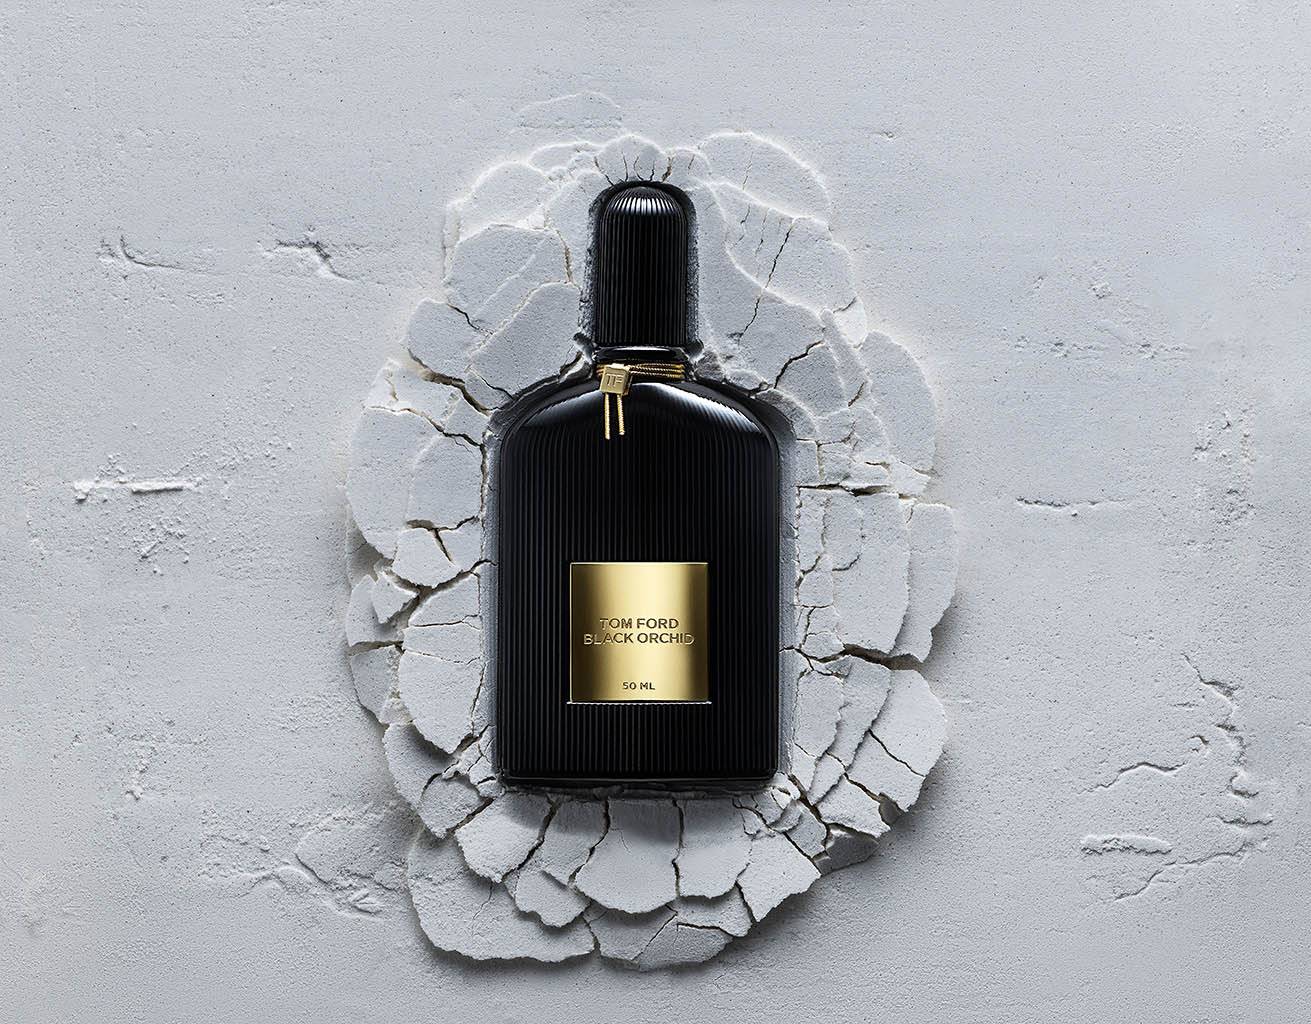 Packshot Factory - Cosmetics Photography - Tom Ford Black Orchid fragrance  bottle